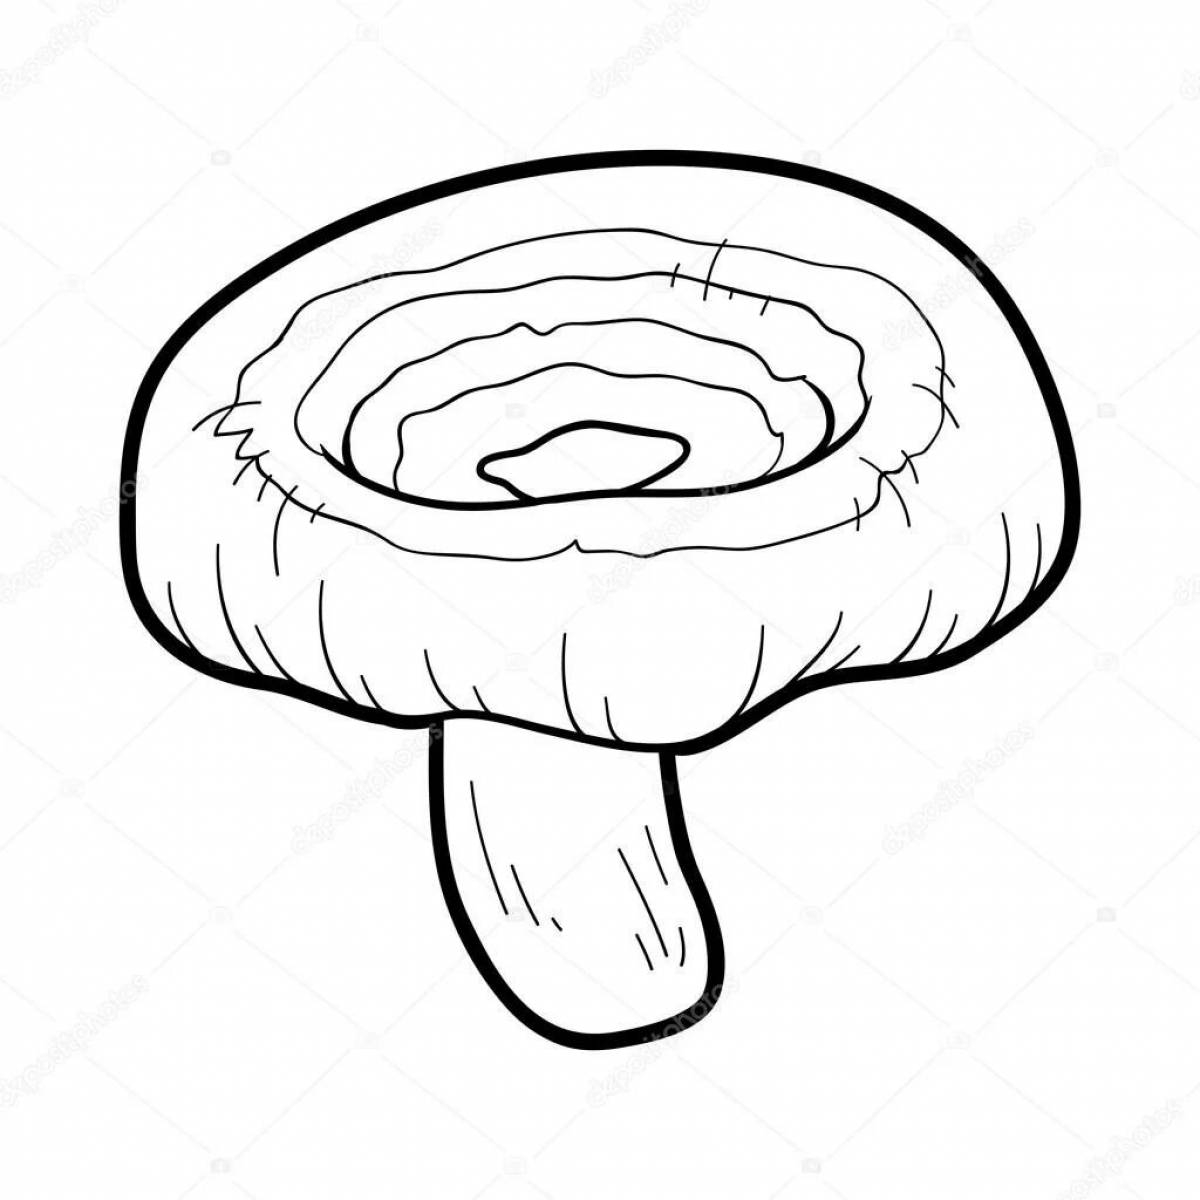 yaroslava: как нарисовать гриб волнушку своими руками